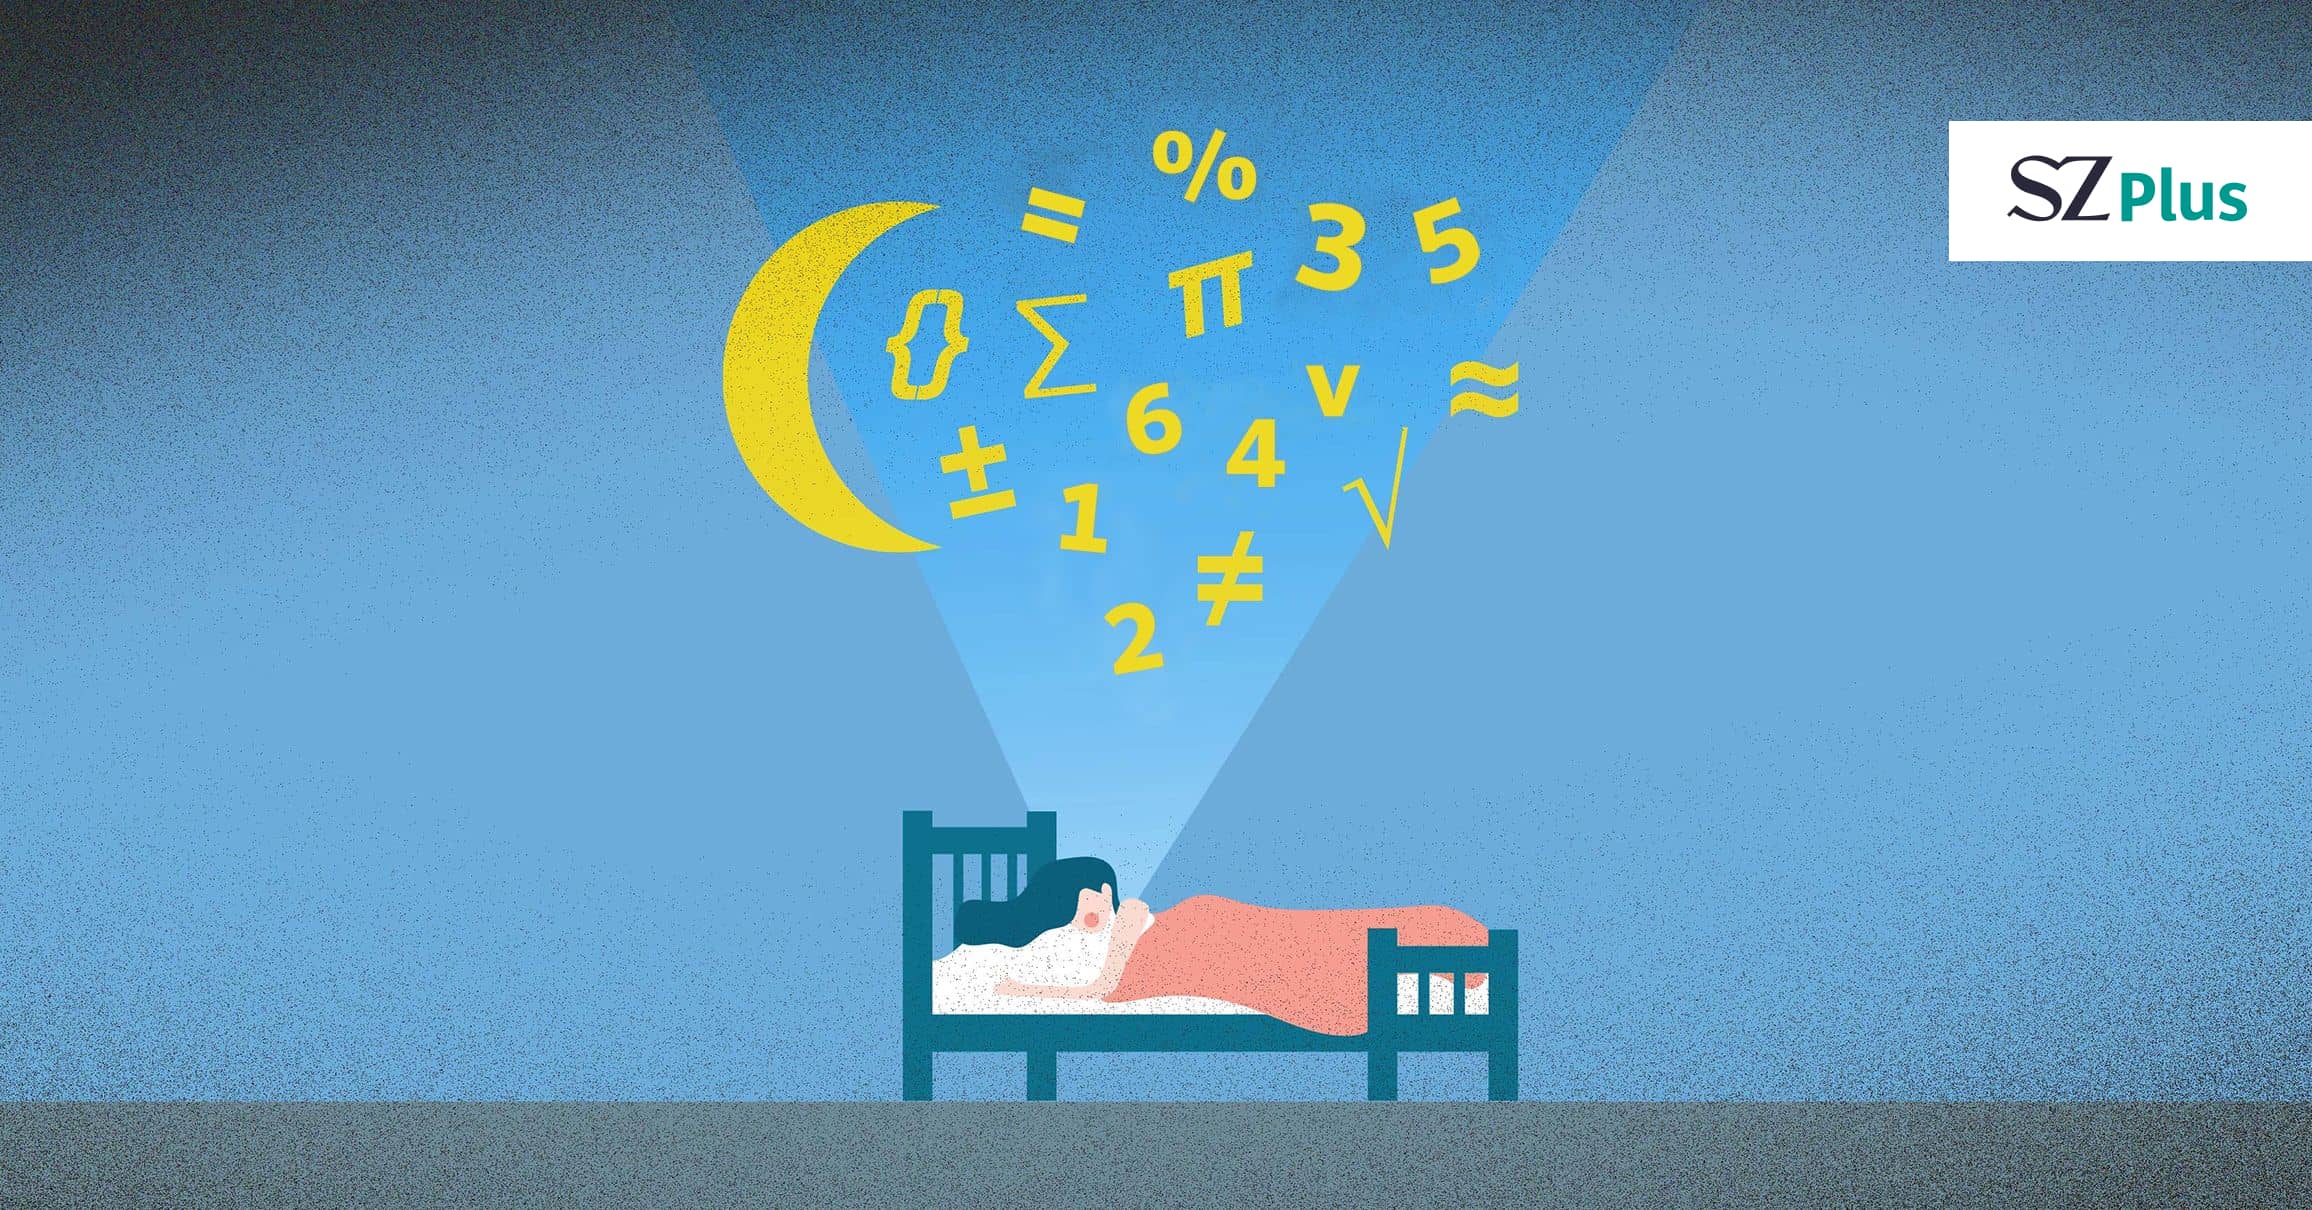 Nightmares: At night in math high school